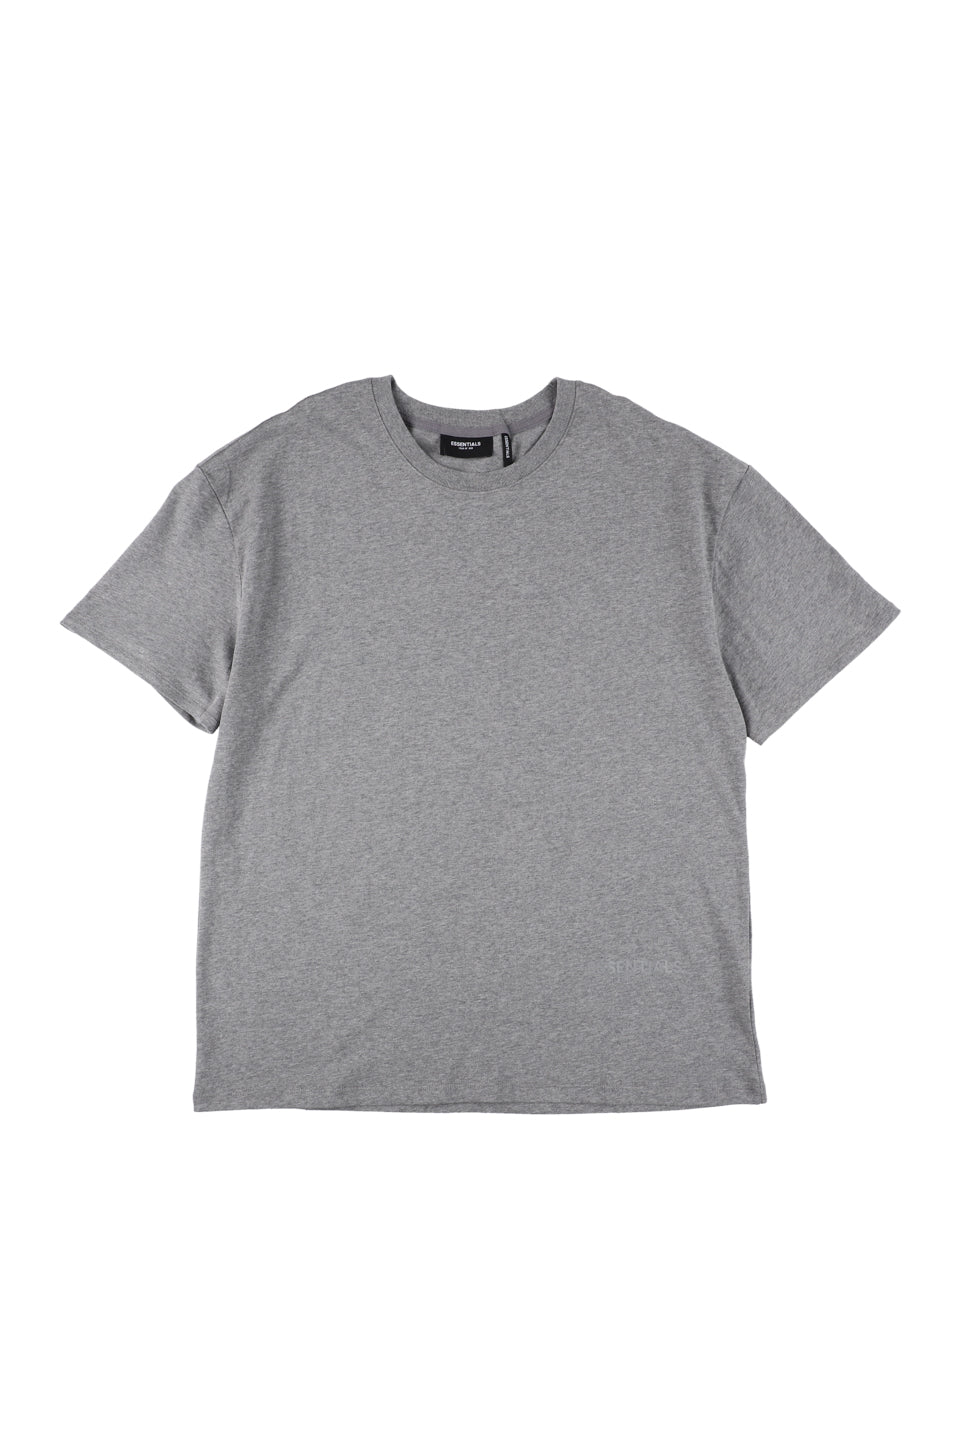 Essentials Boxy Graphic T-Shirt Gray